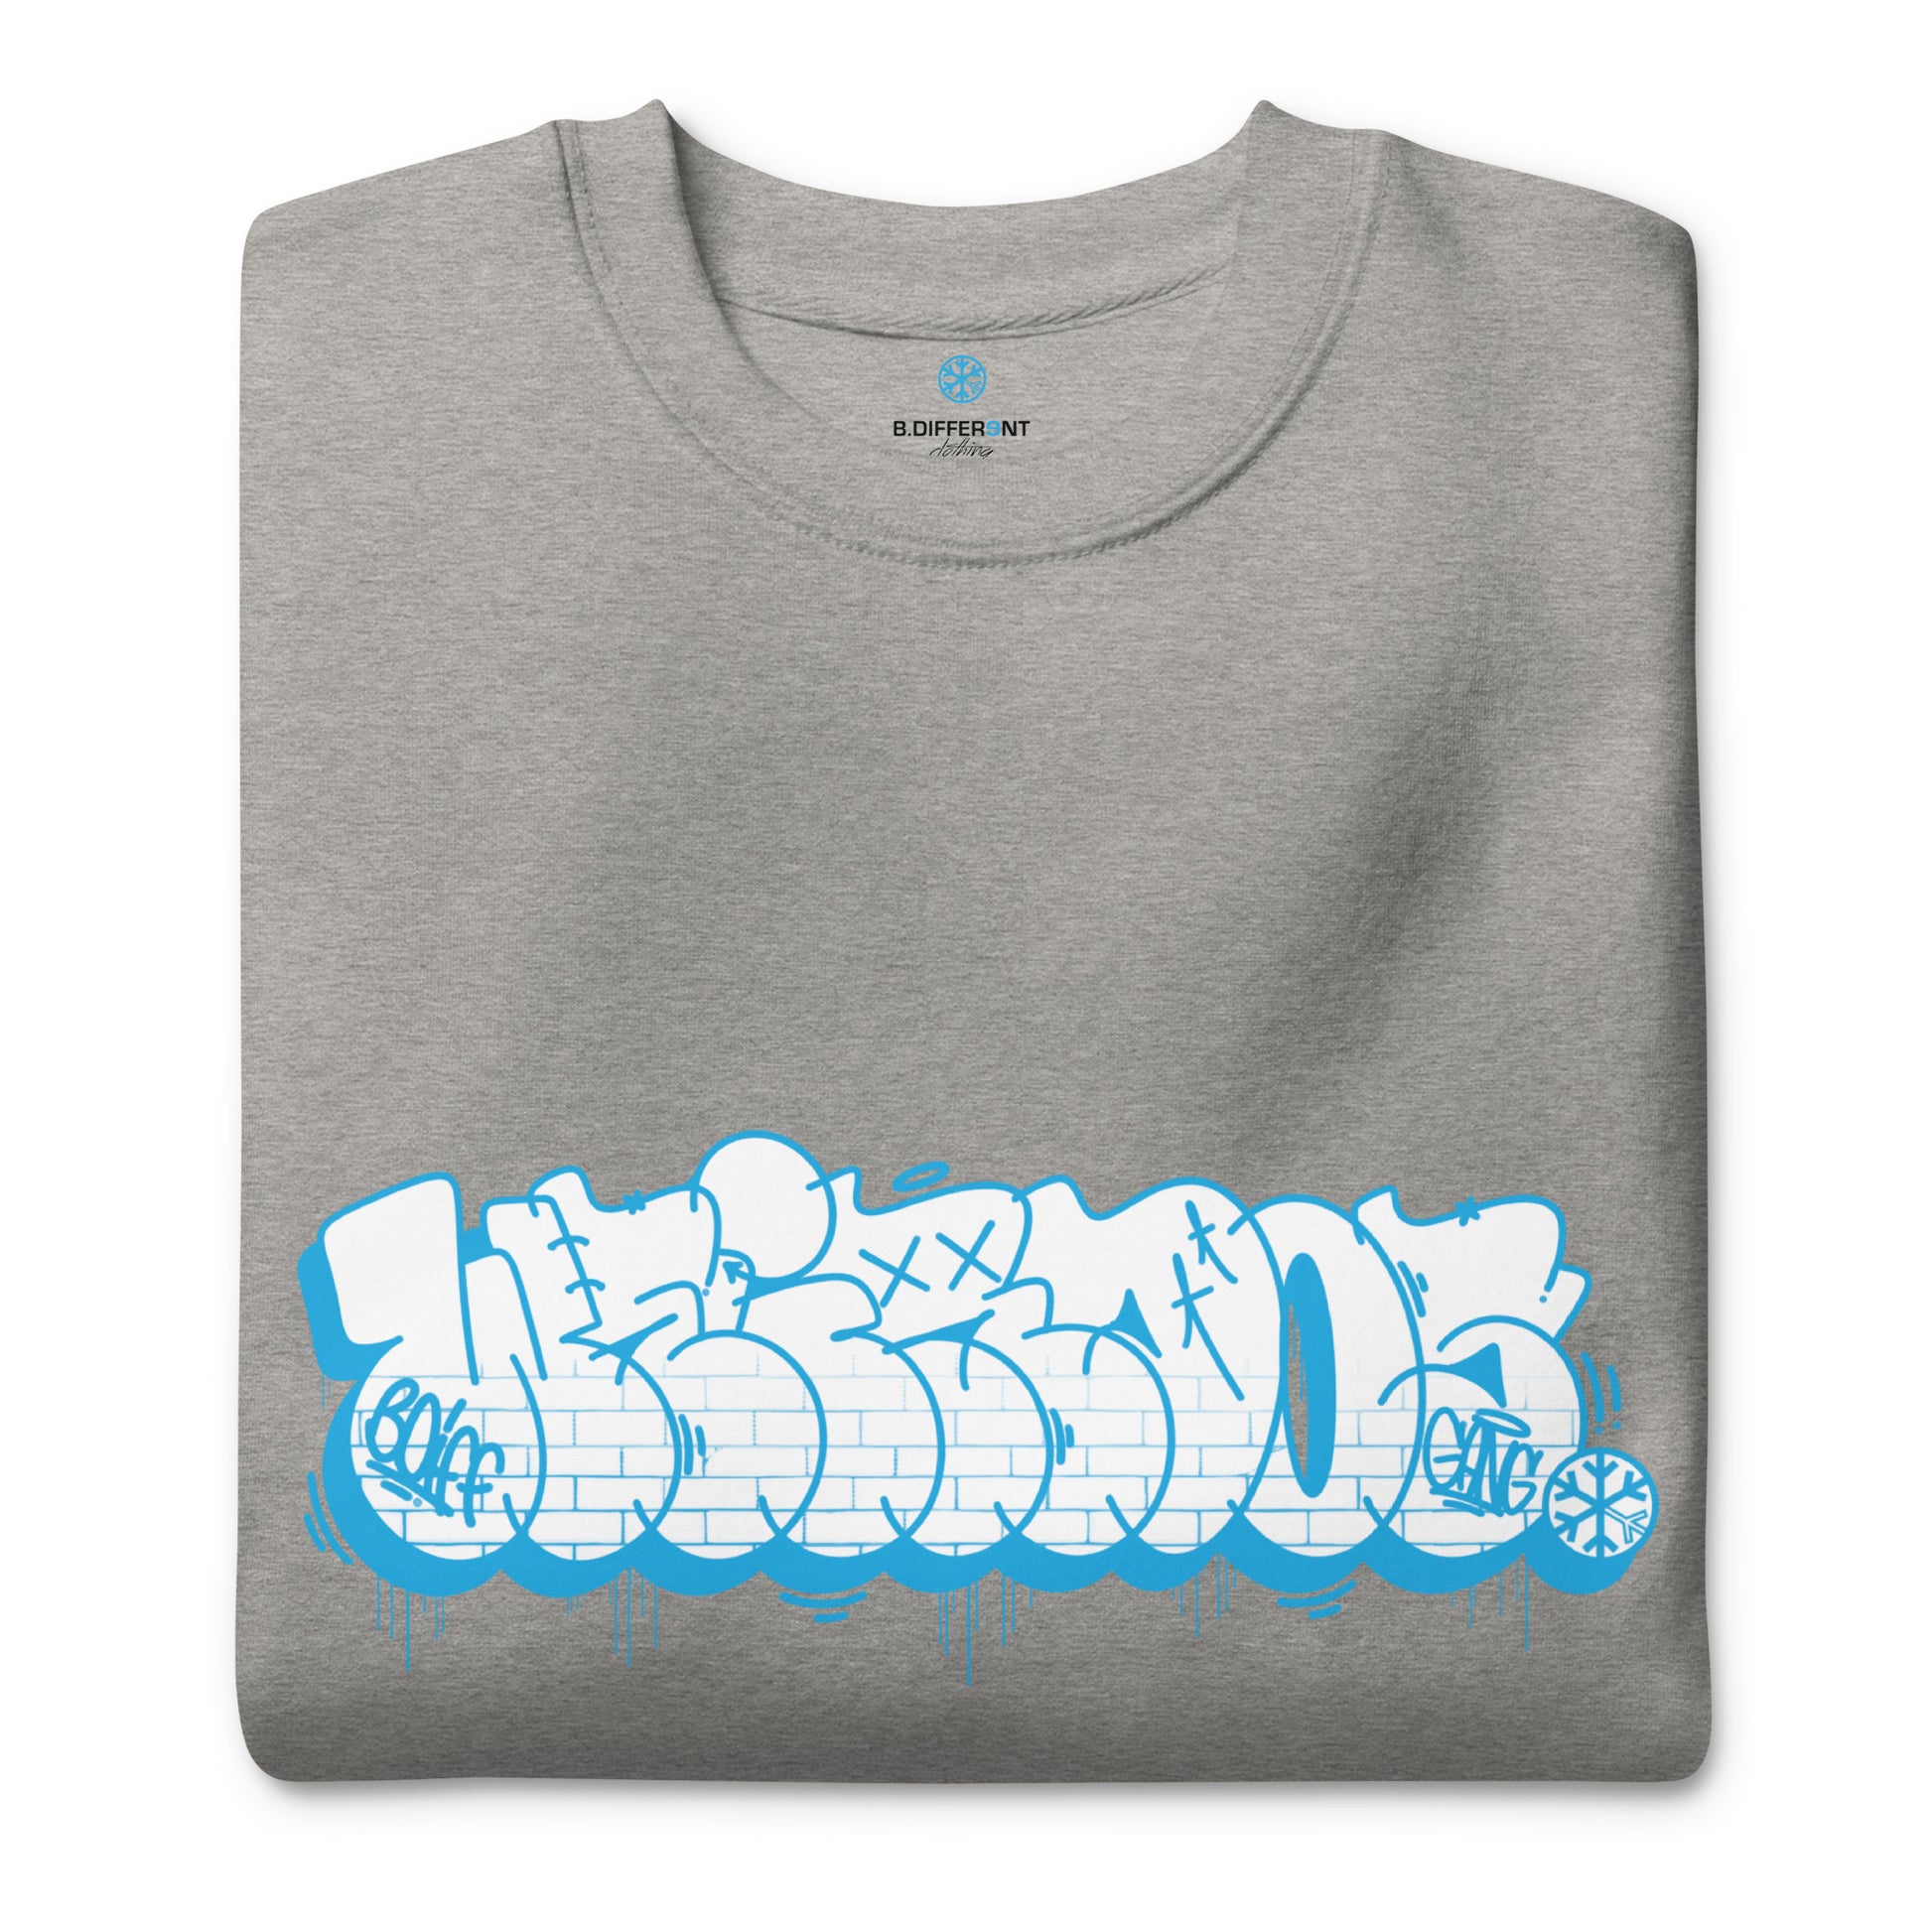 folded sweatshirt Weirdos Gang by Josh Grafx B.Different Clothing street art graffiti inspired brand for weirdos, outsiders, and misfits.